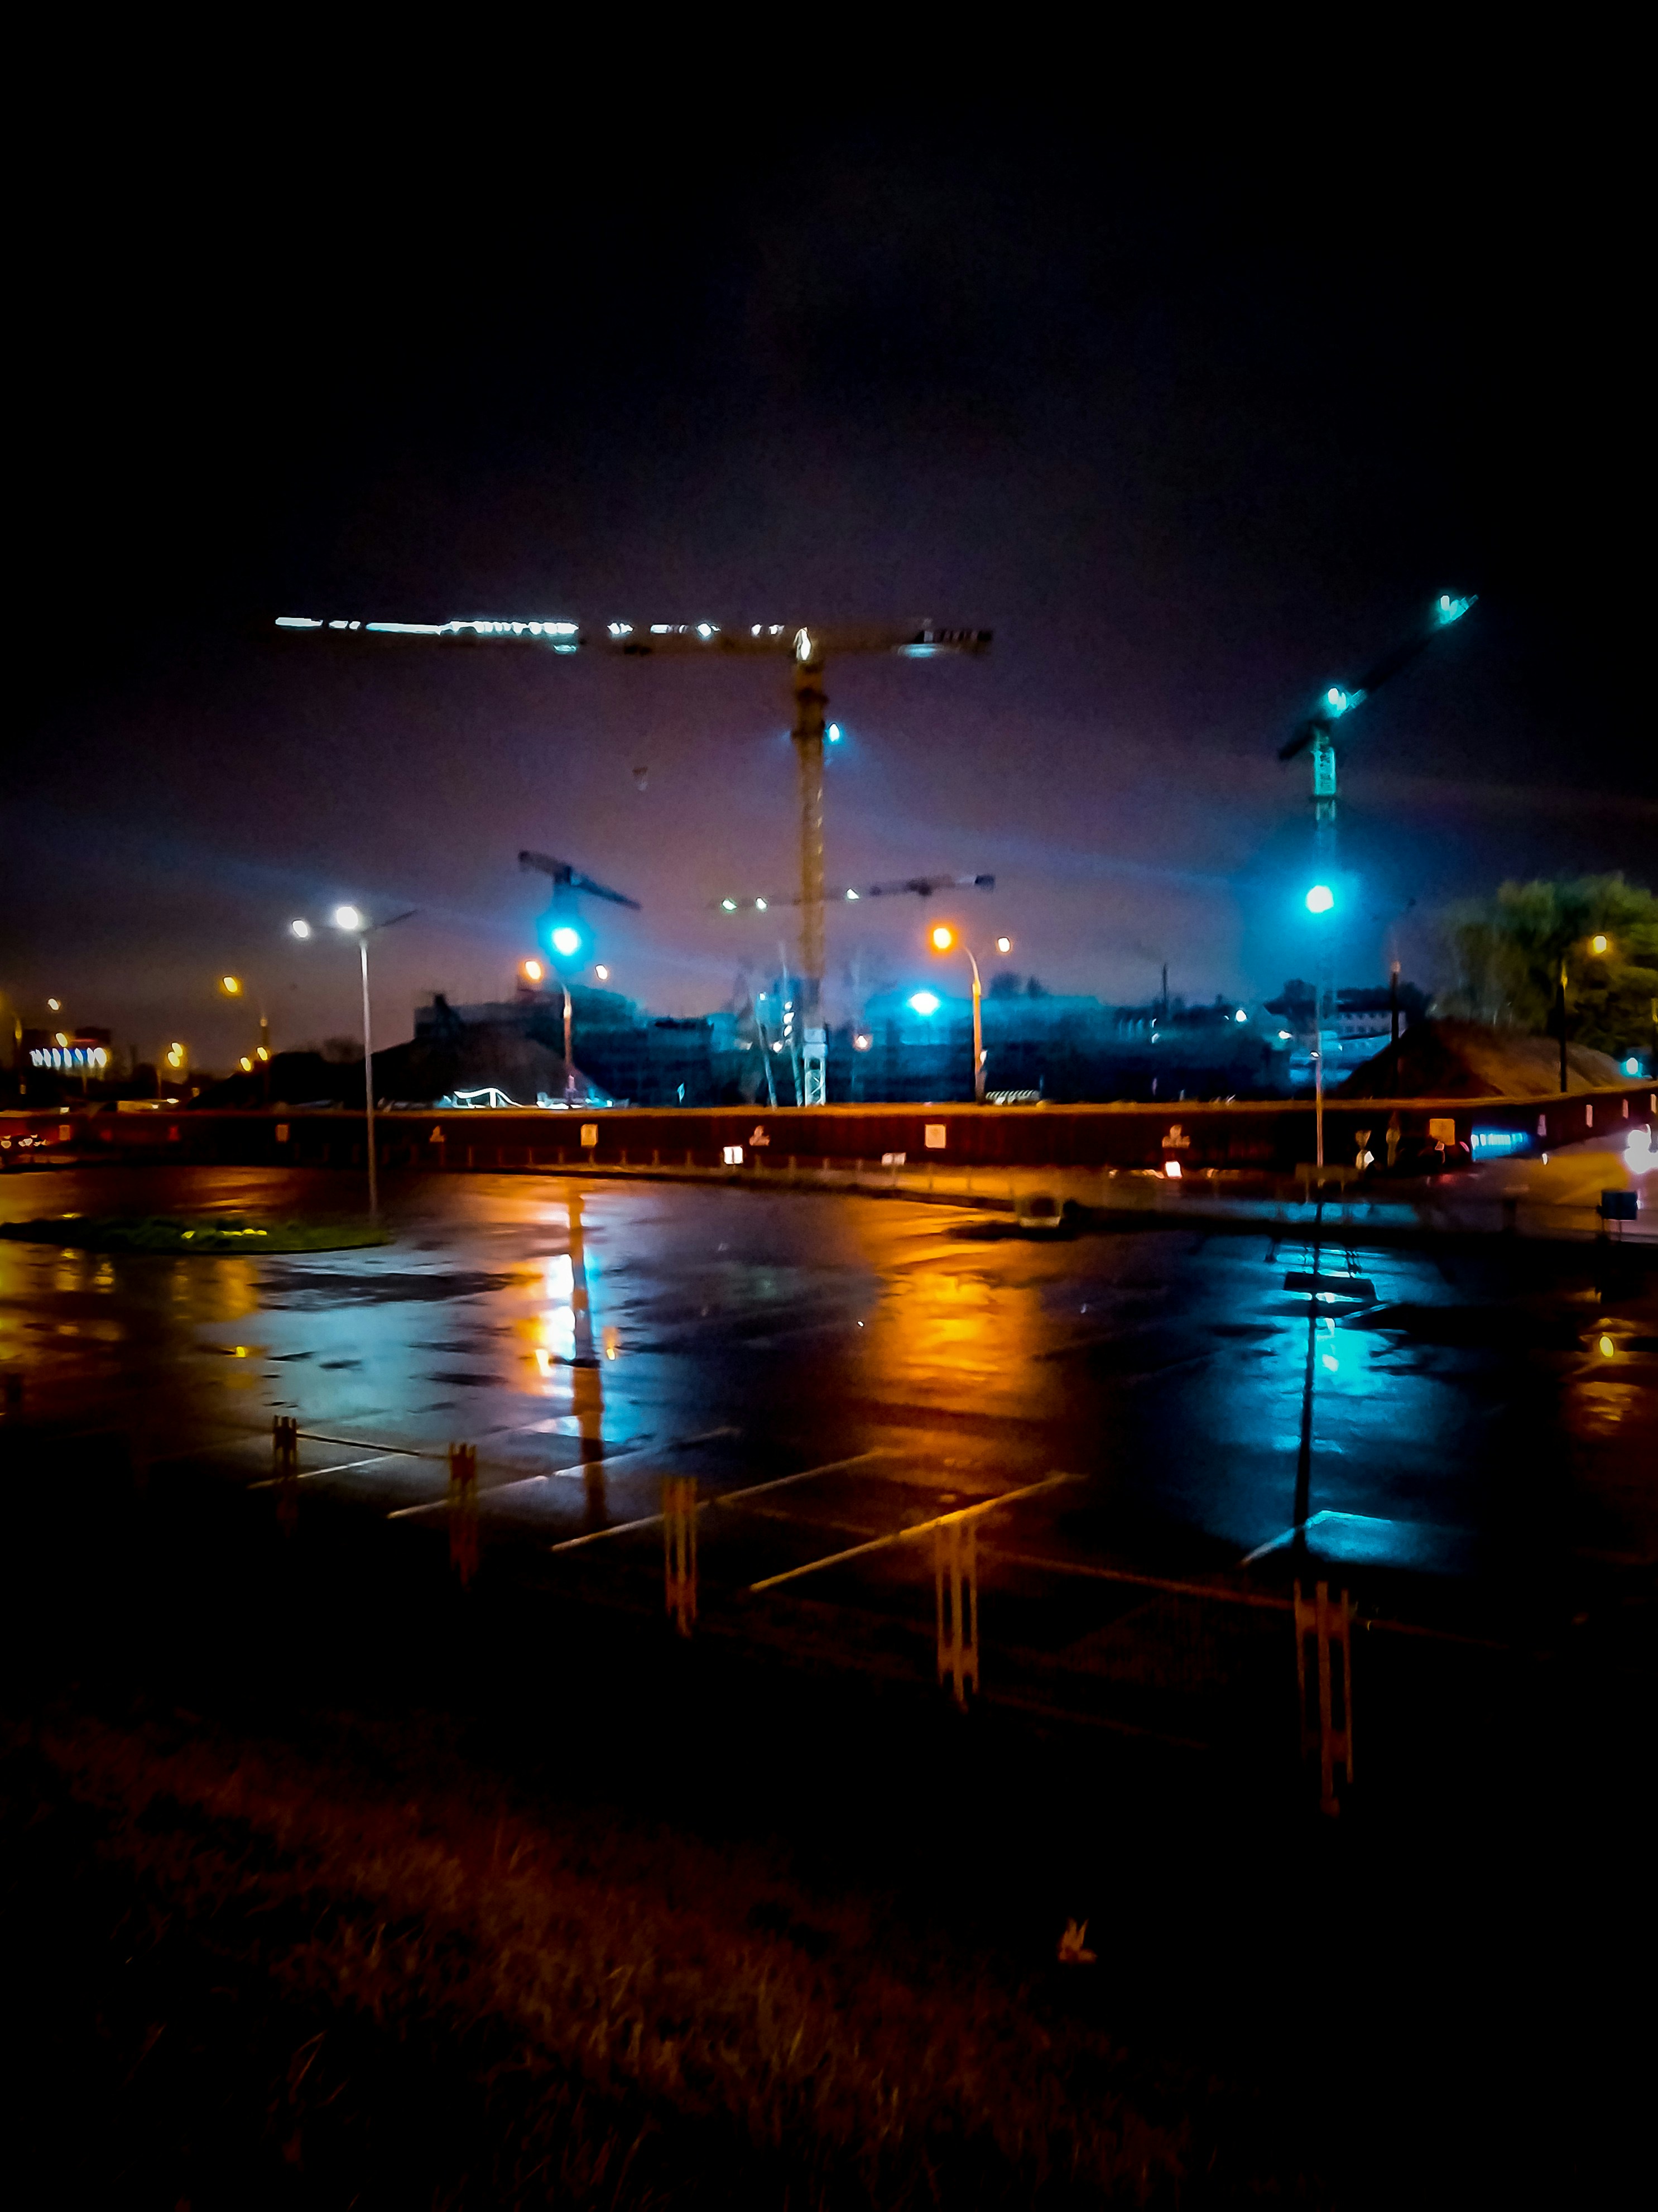 Powerful industrial led flood lights illuminating a parking lot